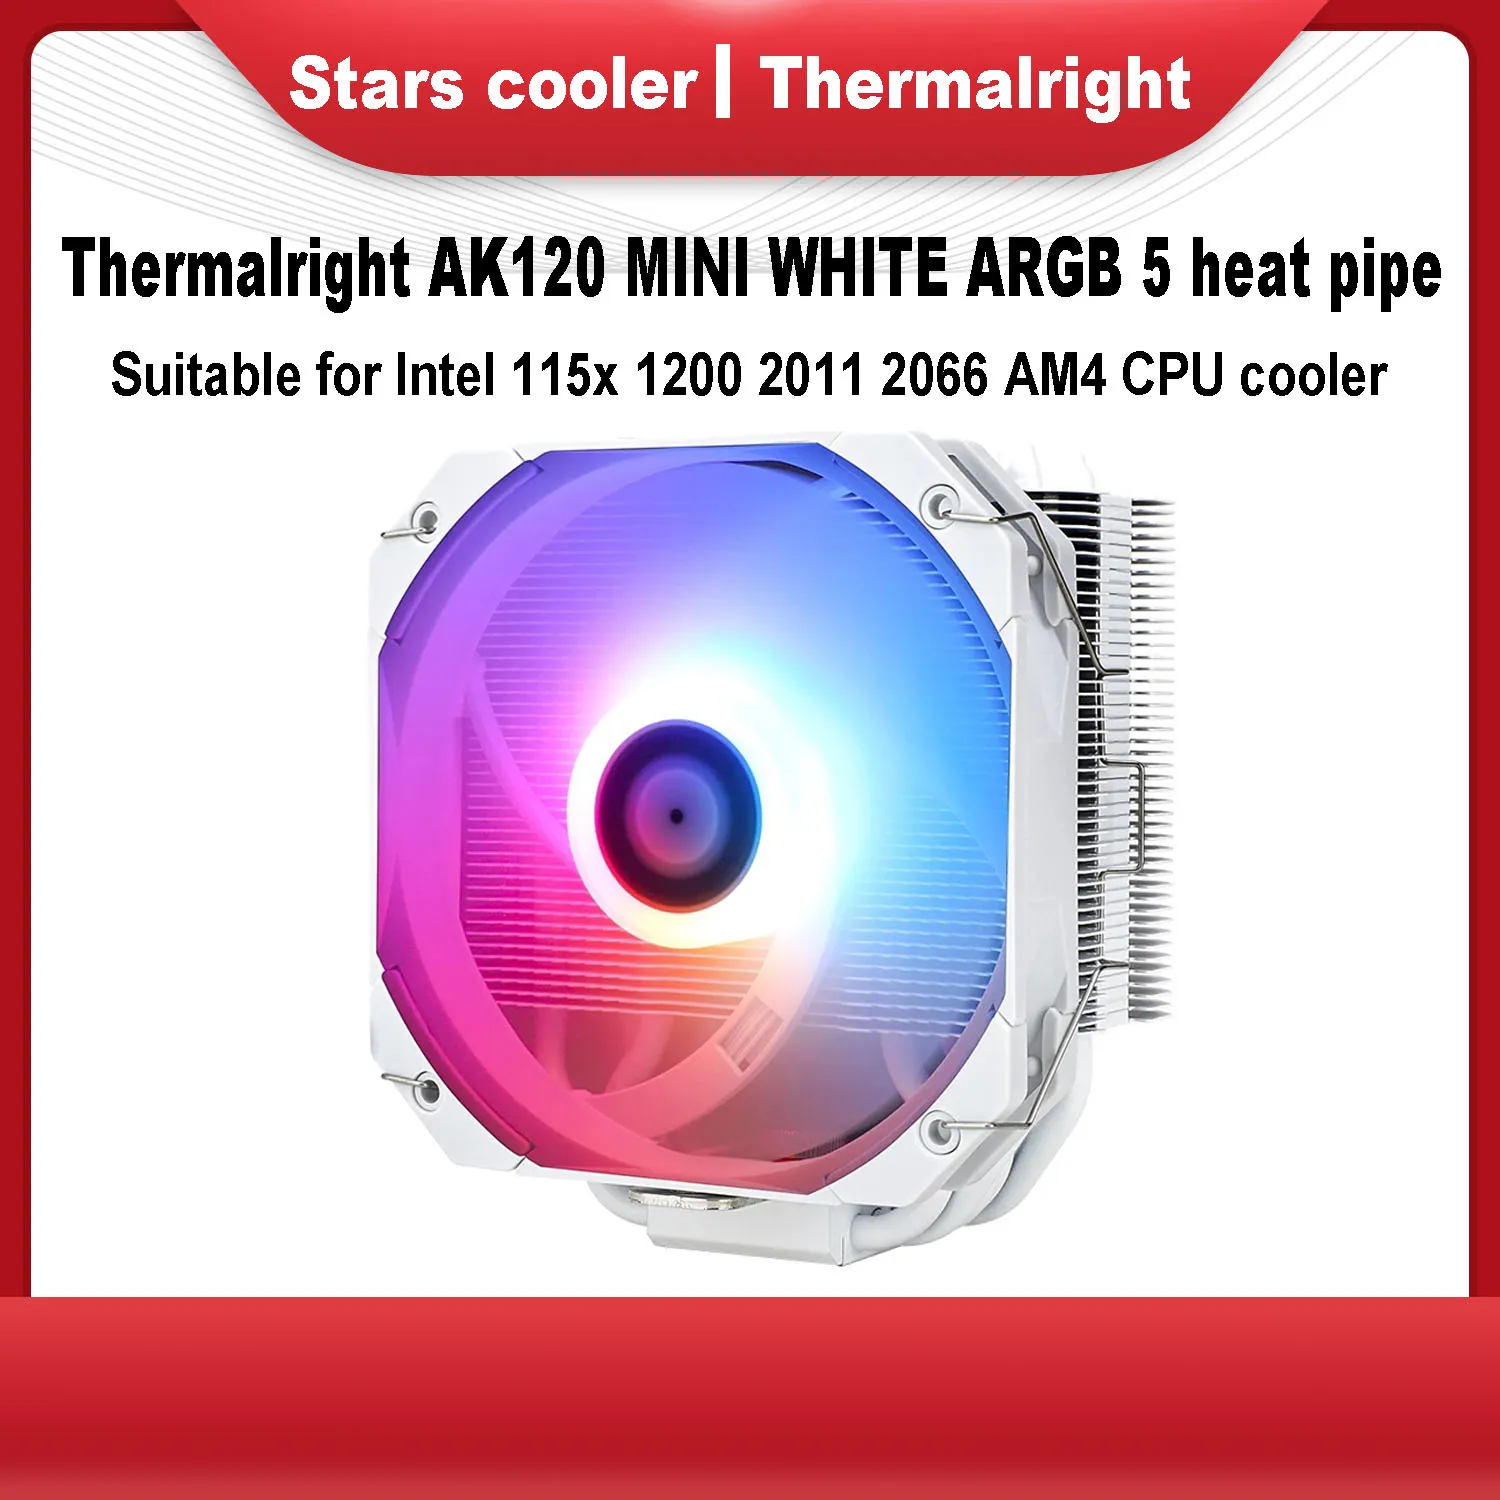 Thermalright AK120 MINI WHITE ARGB 5 heat pipe for Intel115x 1200 2011 2066 AM4 CPU cooler